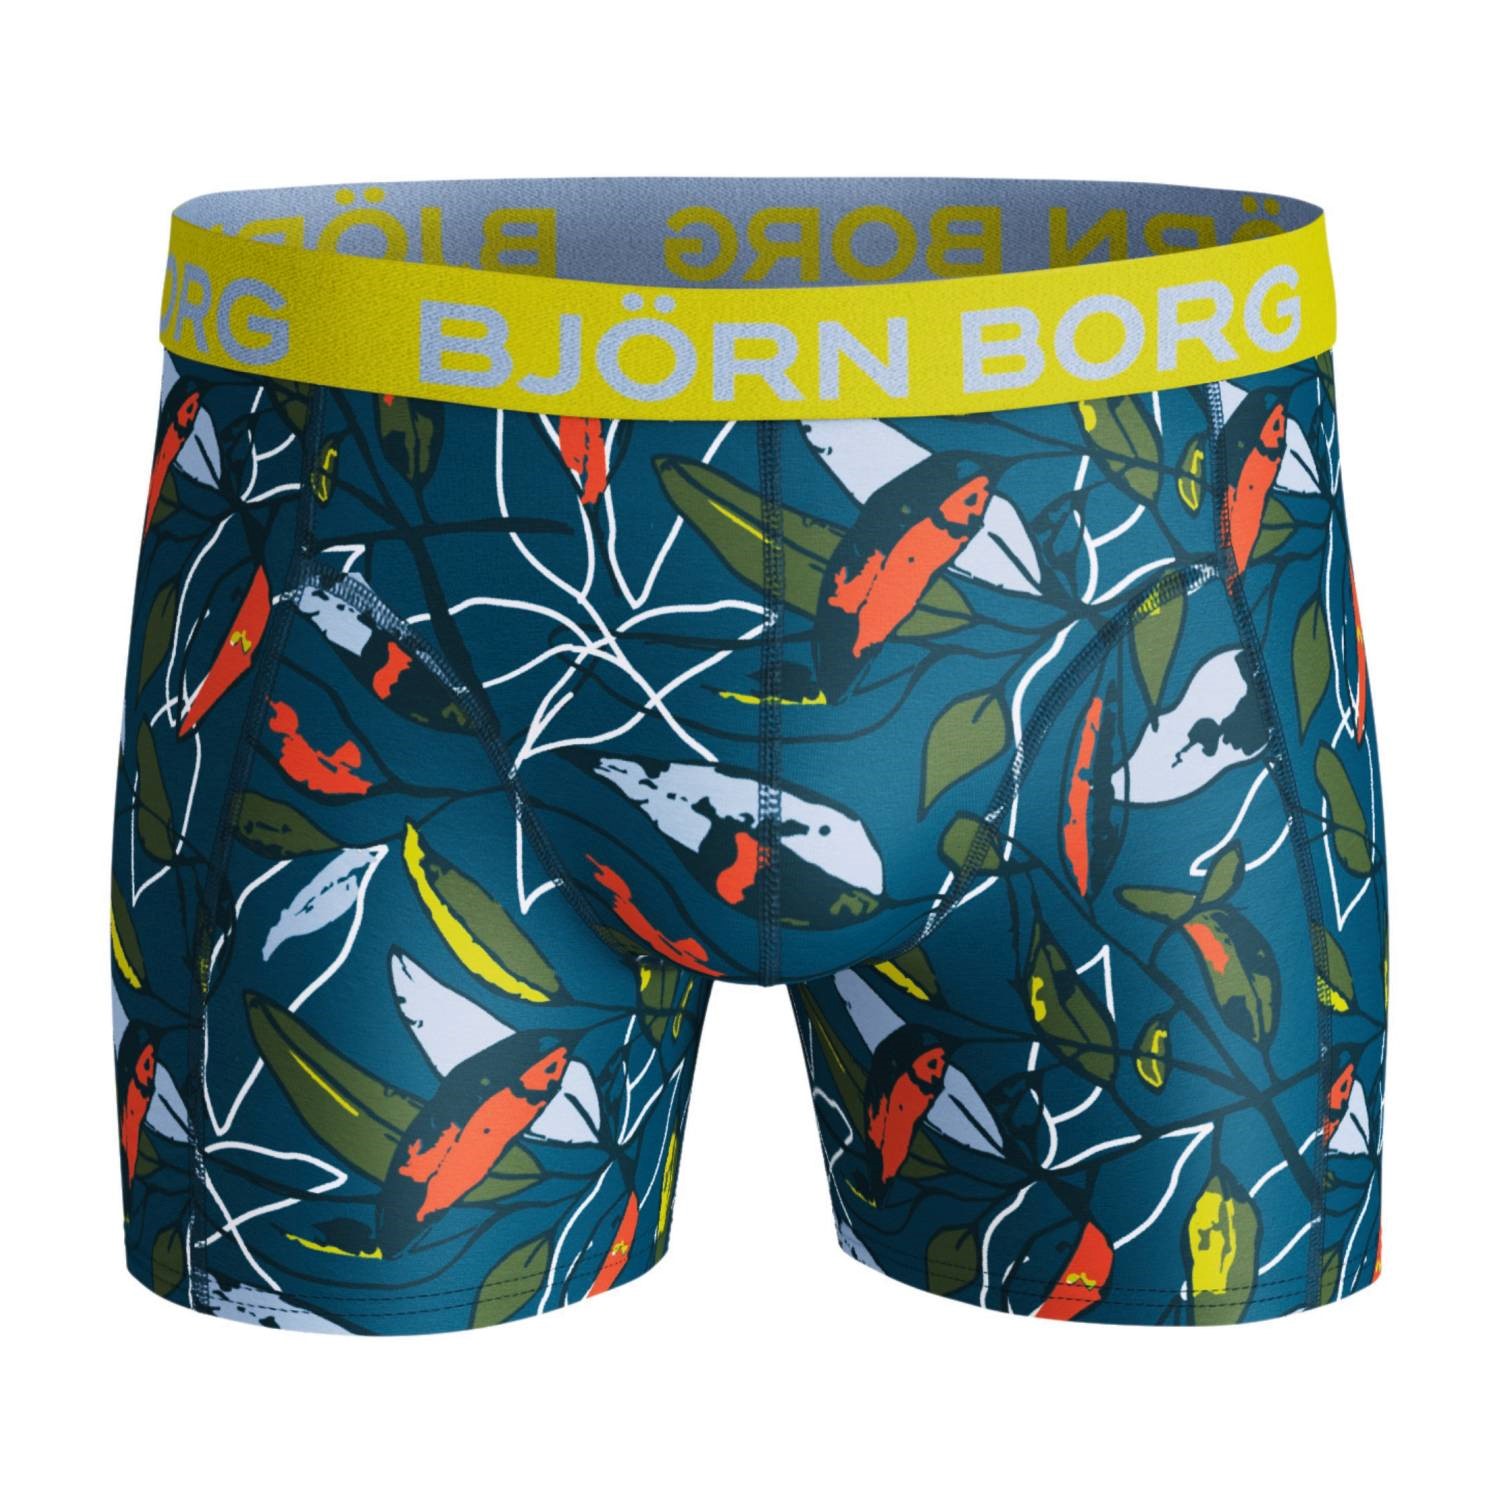 Björn Borg Lightweight Microfiber Greenery Shorts